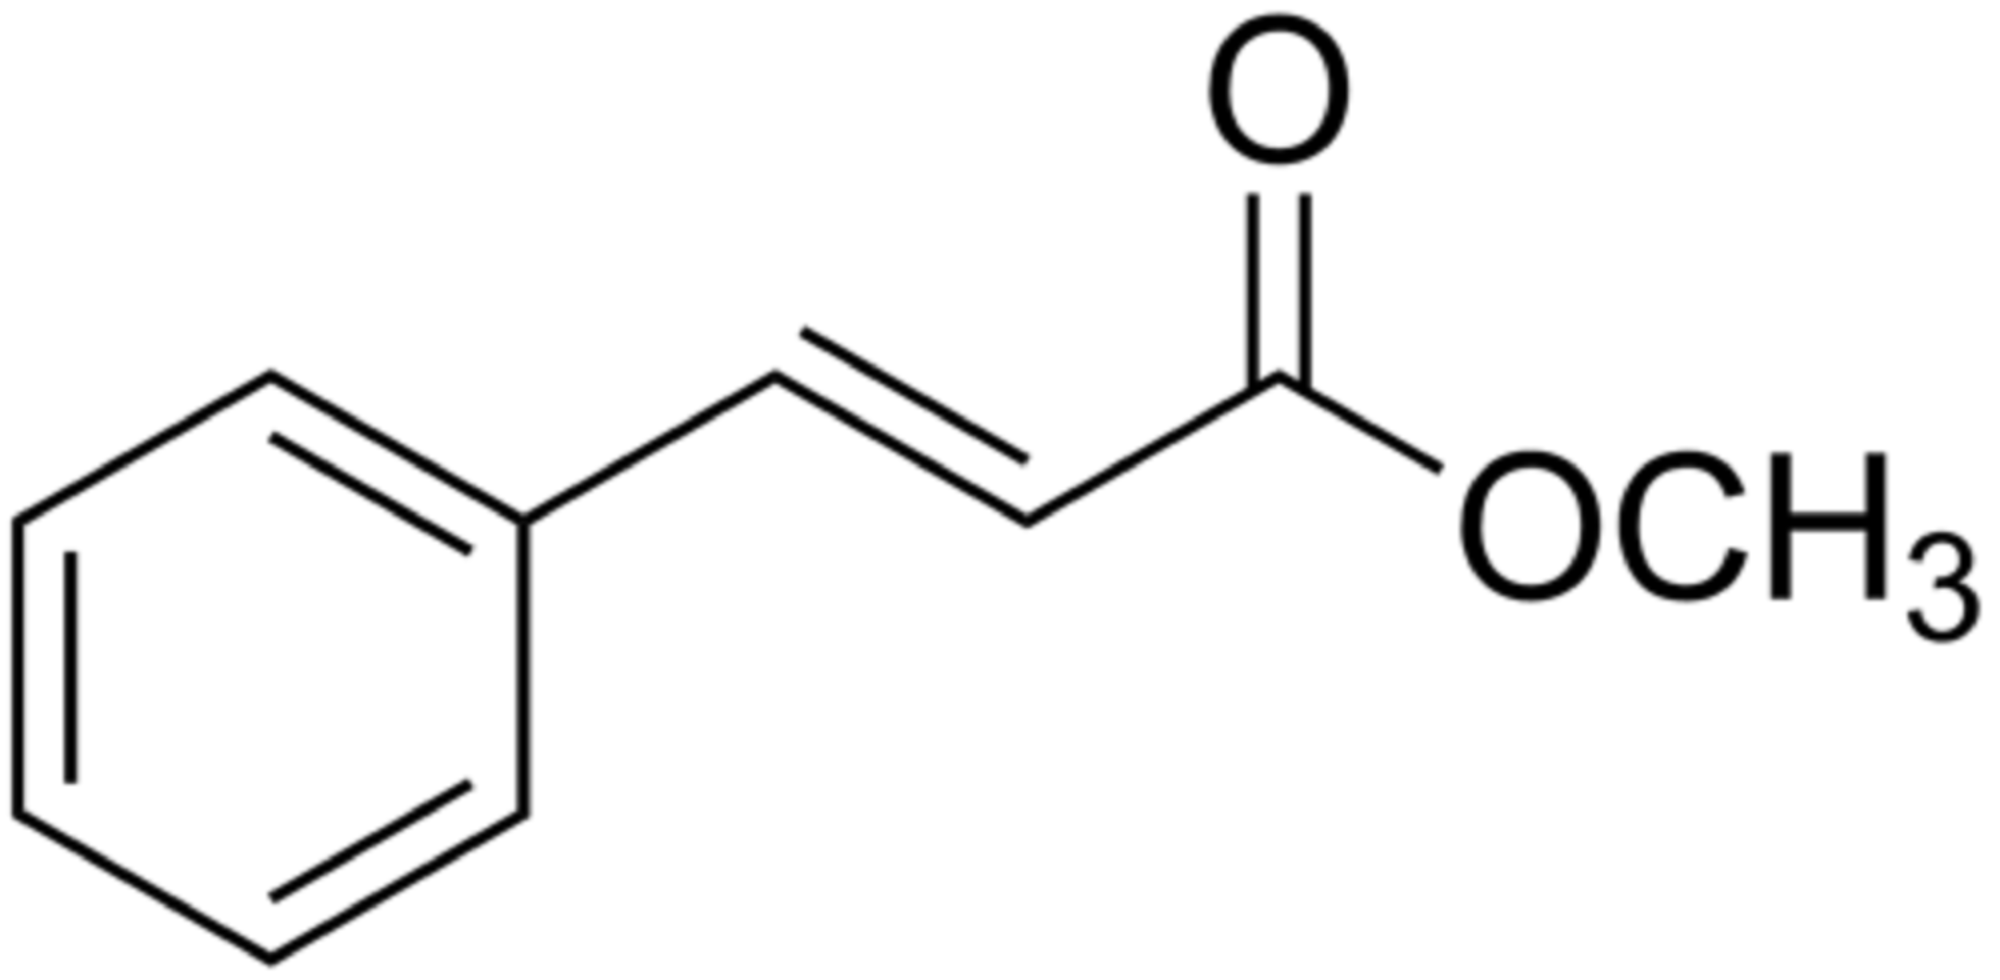 Methyl Chavicol